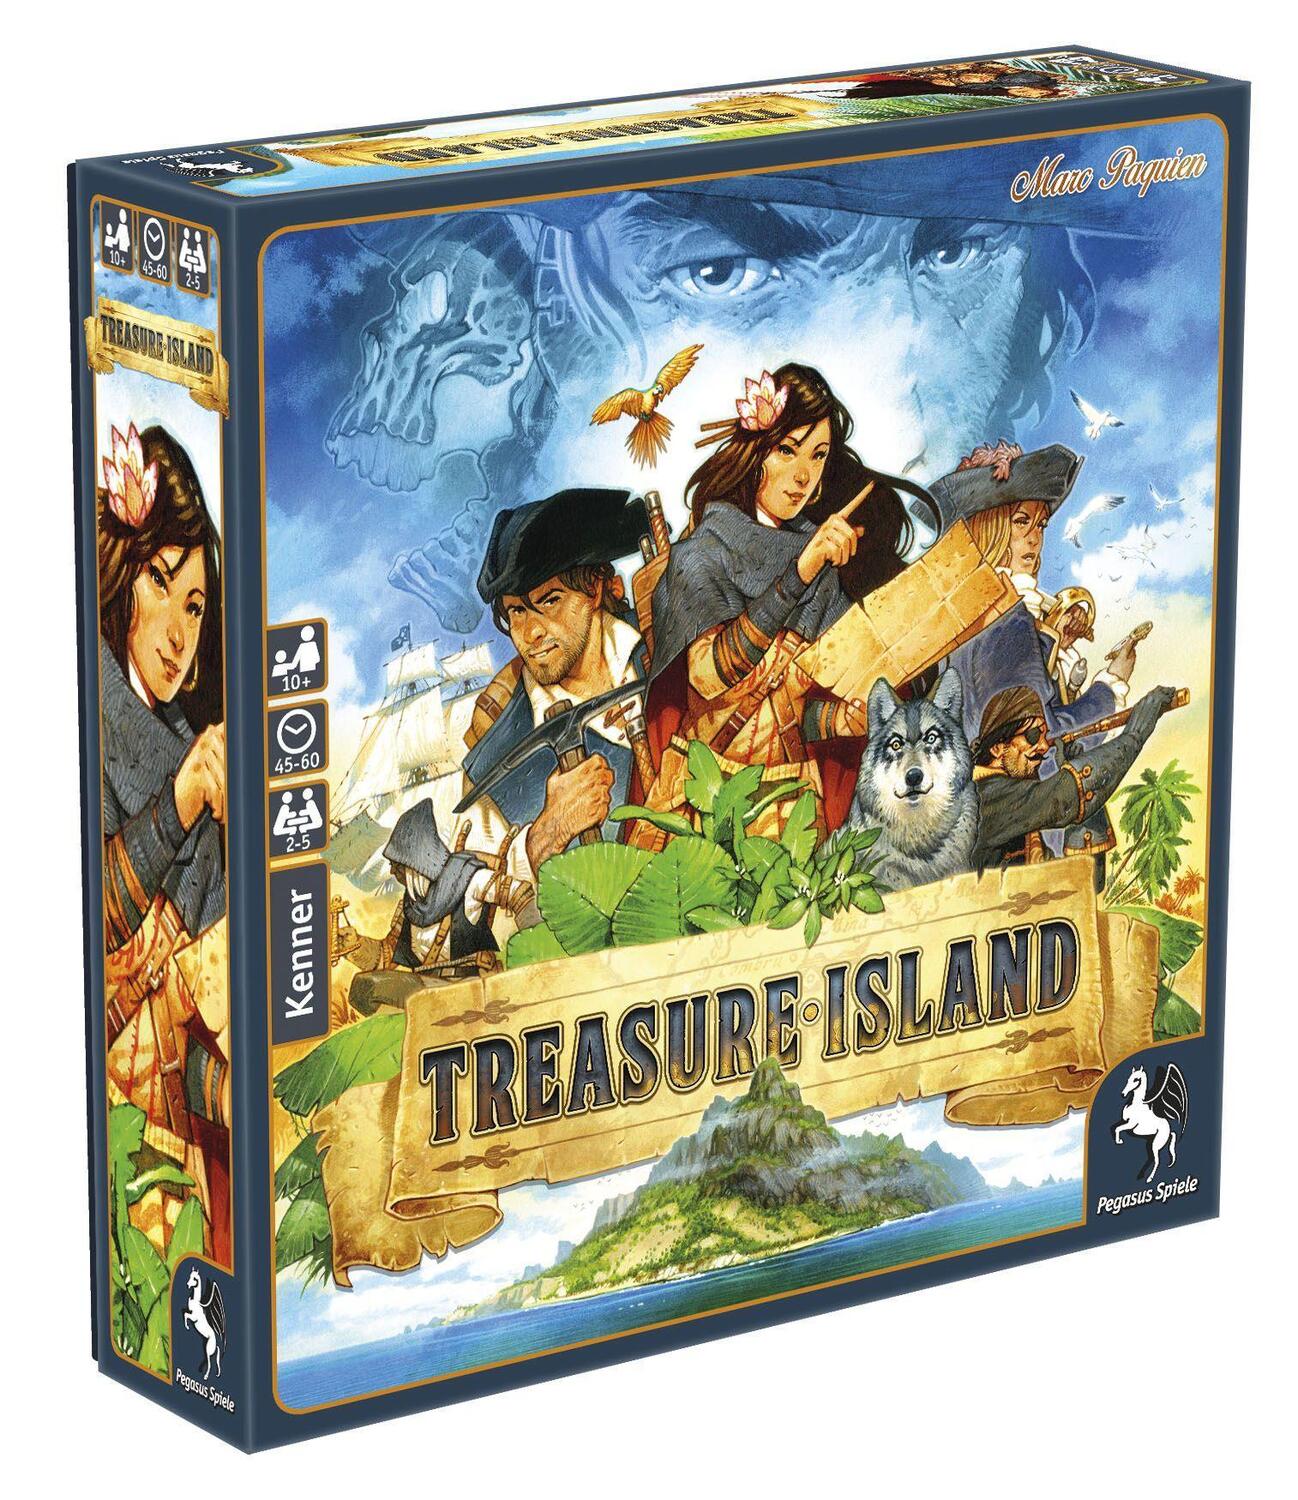 Bild: 4250231717222 | Treasure Island | Spiel | Deutsch | 2019 | Pegasus | EAN 4250231717222